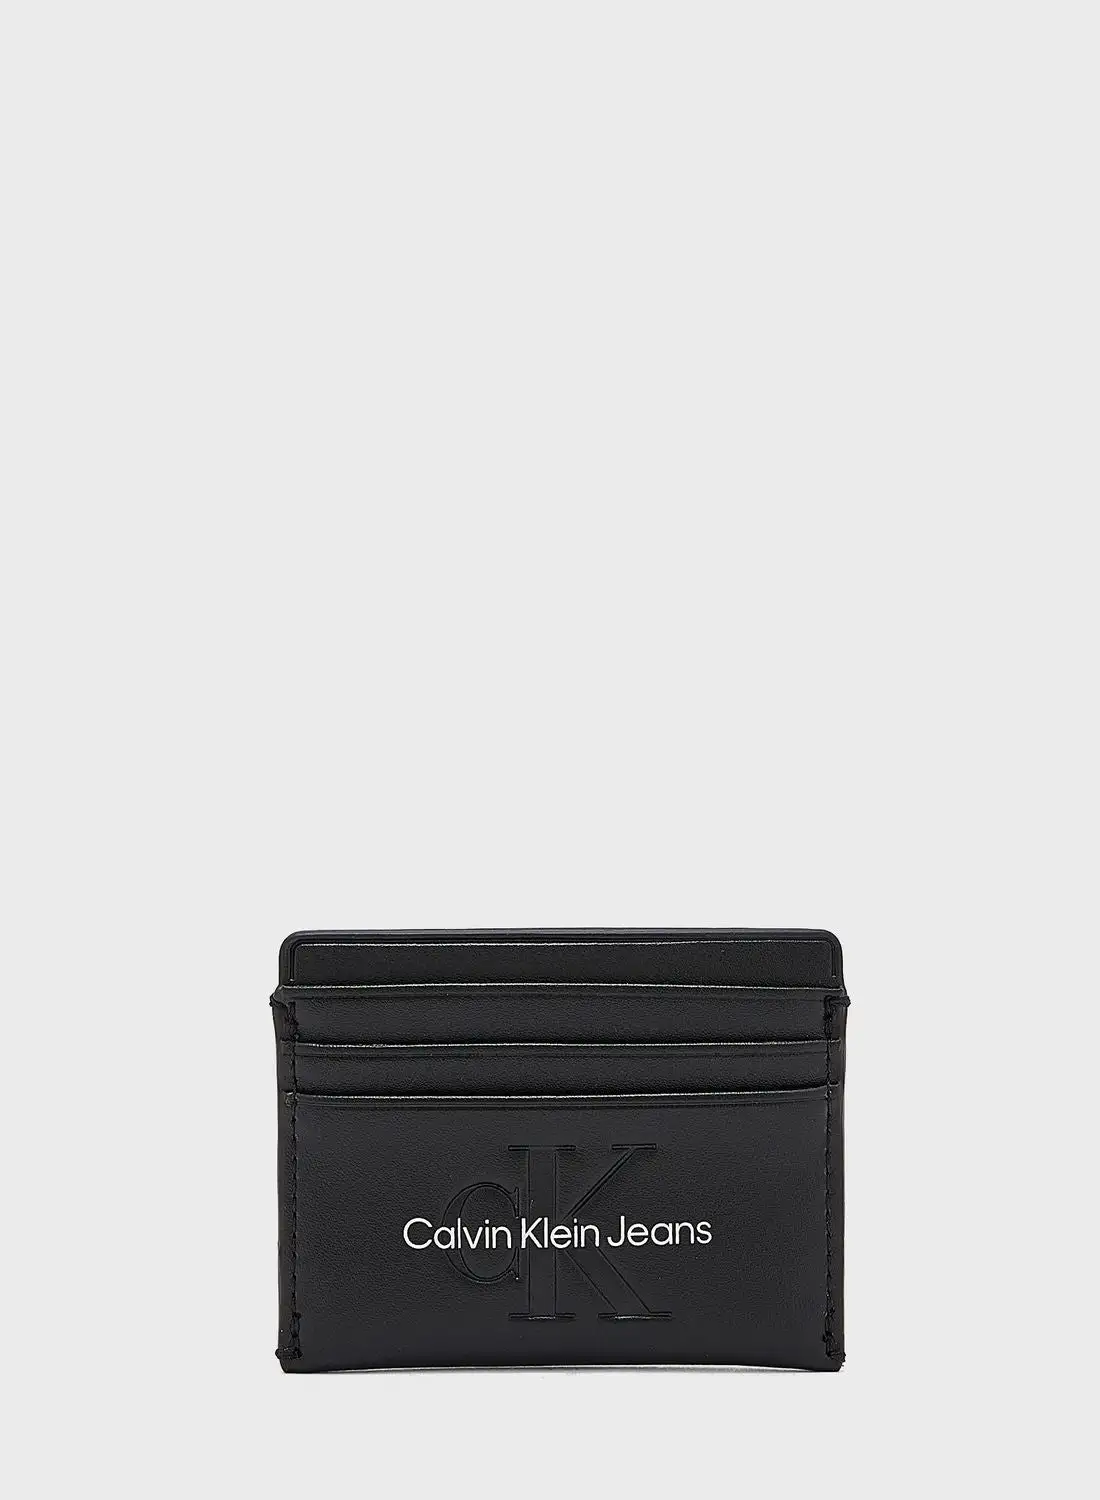 Calvin Klein Jeans Sculpted Monogram Cardholder